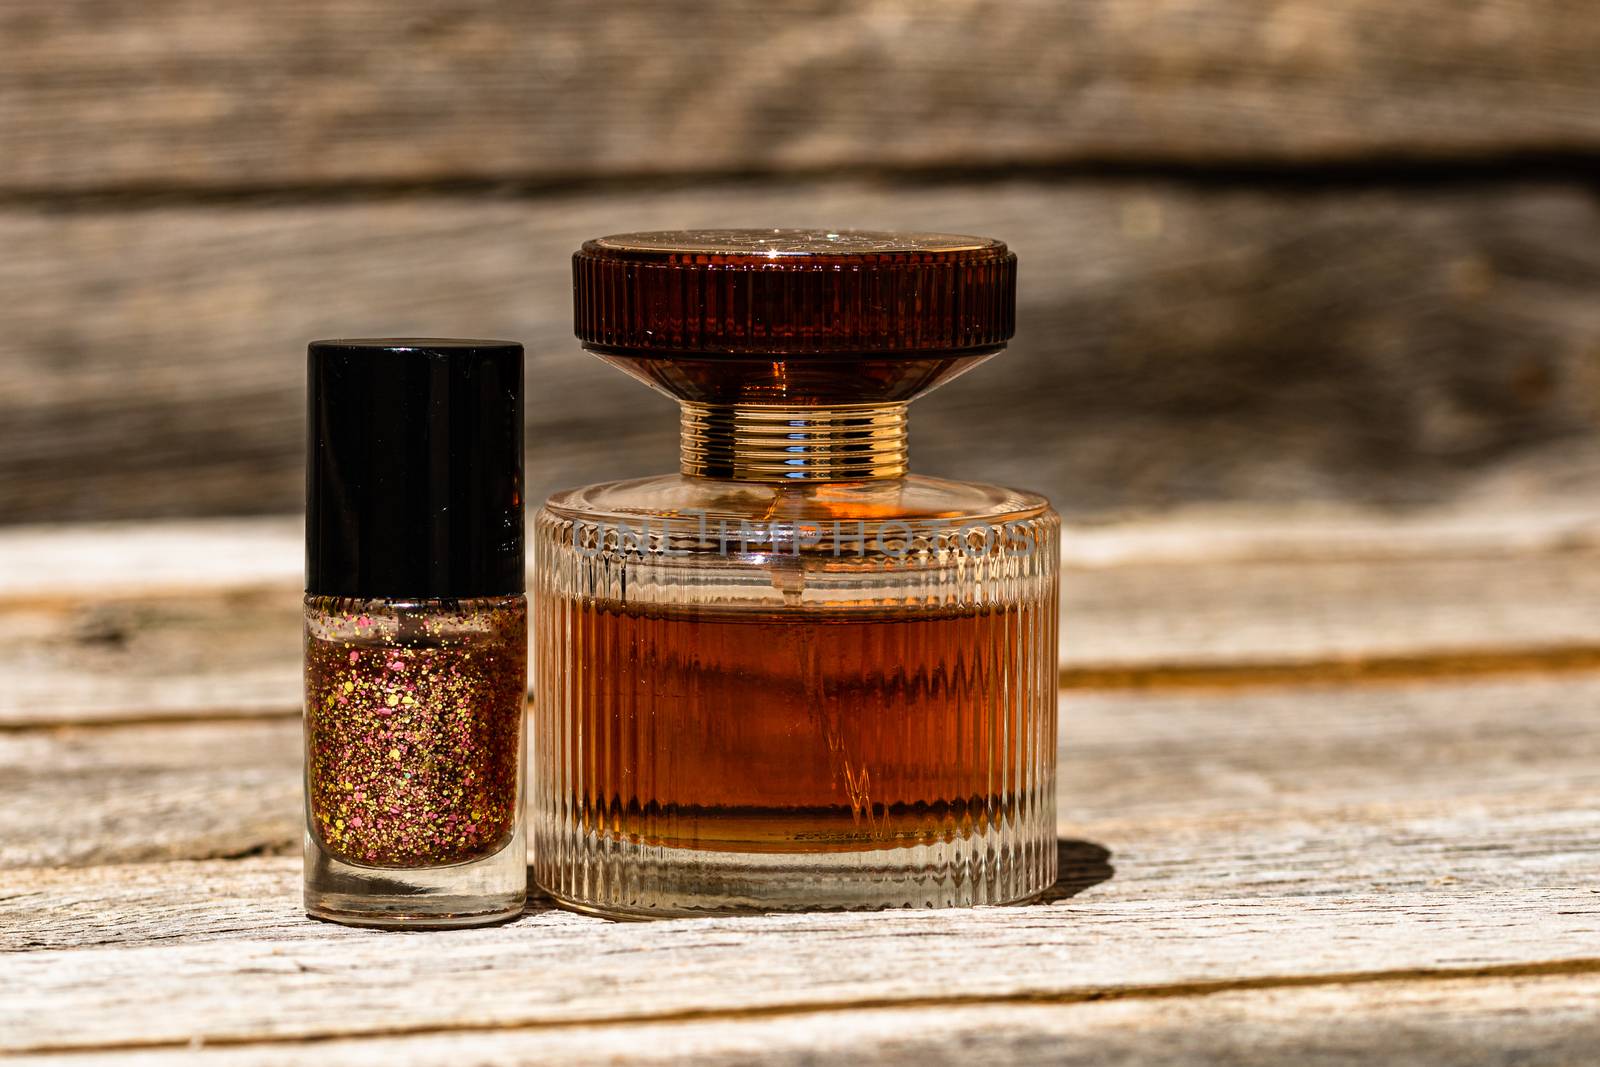 Glittery colorful and bright nail polish and elegant perfume bot by vladispas